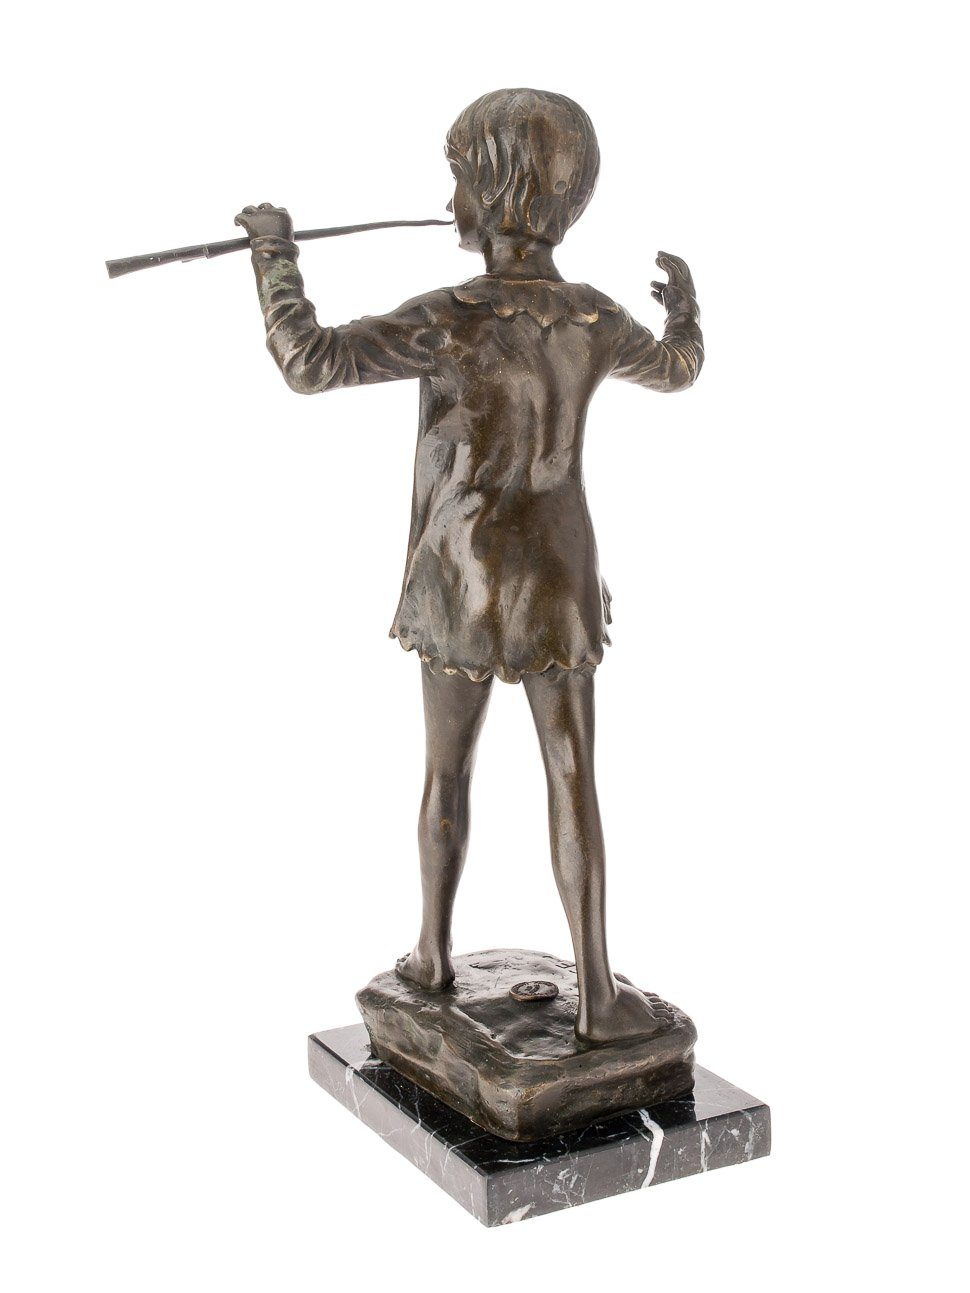 Aubaho Skulptur Bronzeskulptur Skulptur Peter Pan Bronze Re George nach Figur Frampton